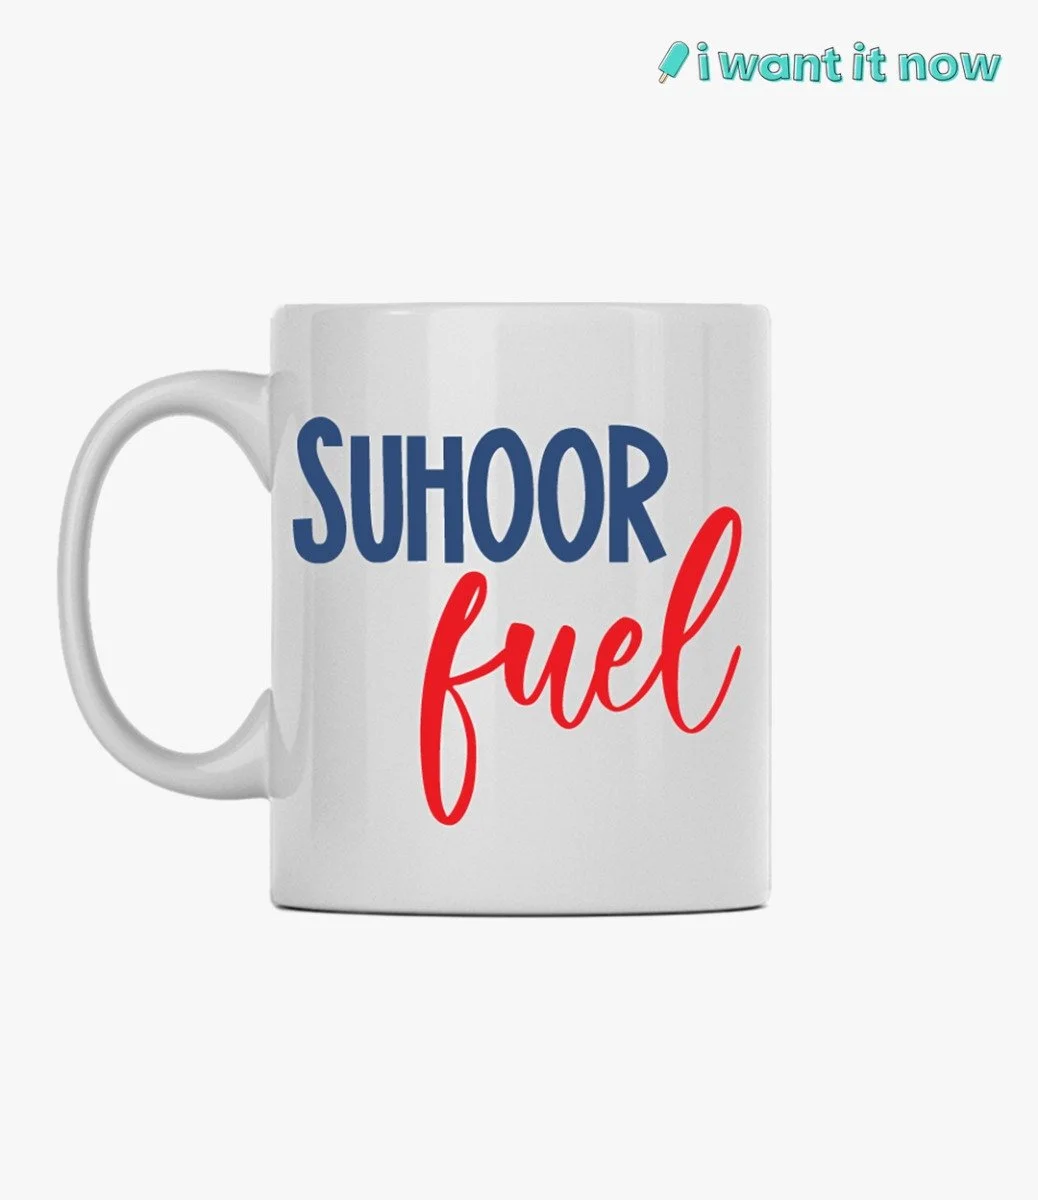 Suhoor Fuel Mug By I Want It Now